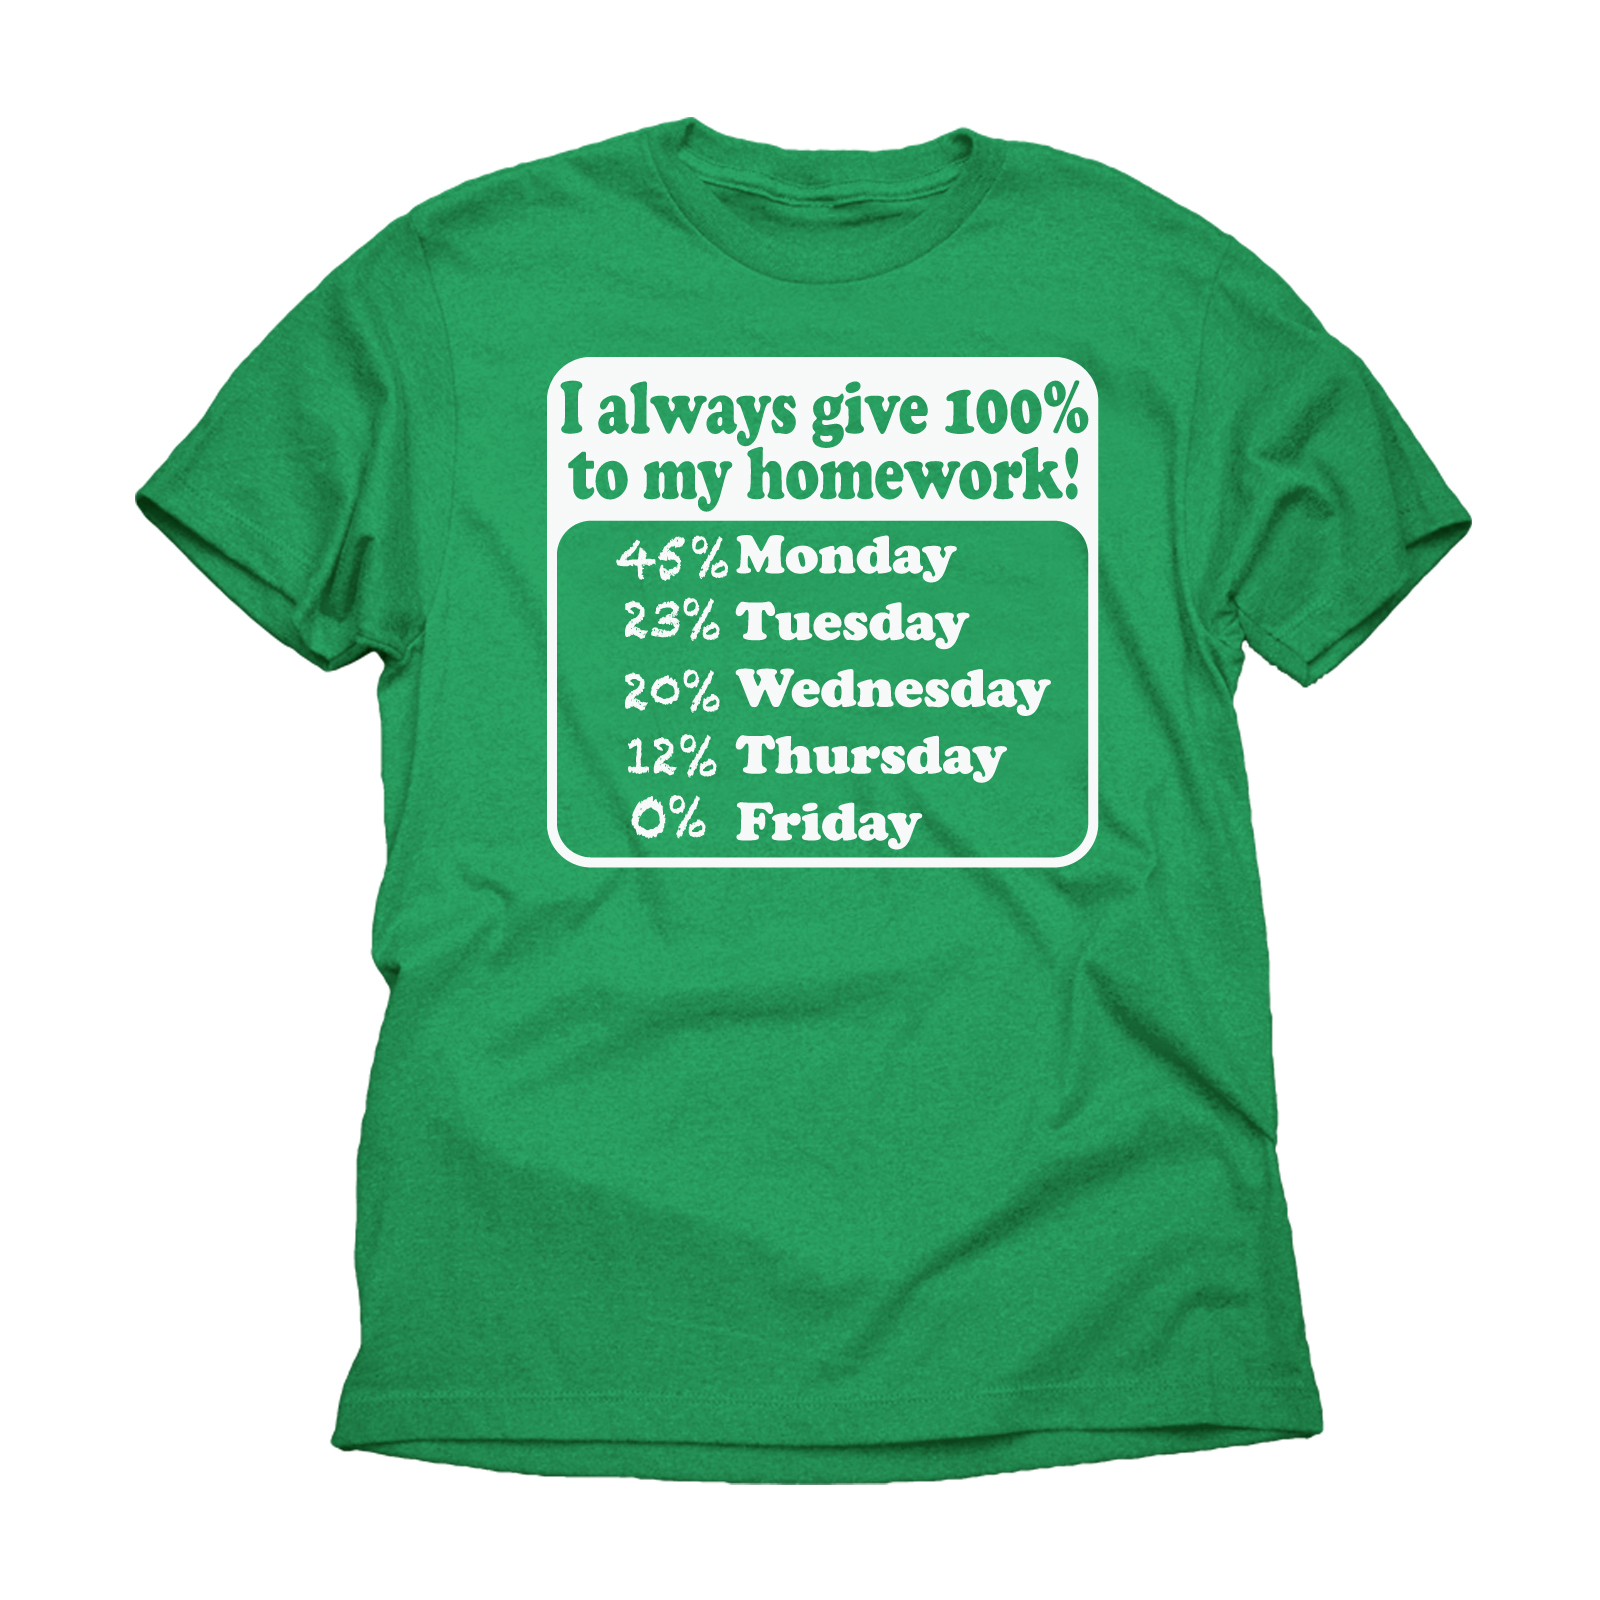 Route 66 Boy's Graphic T-Shirt - Homework